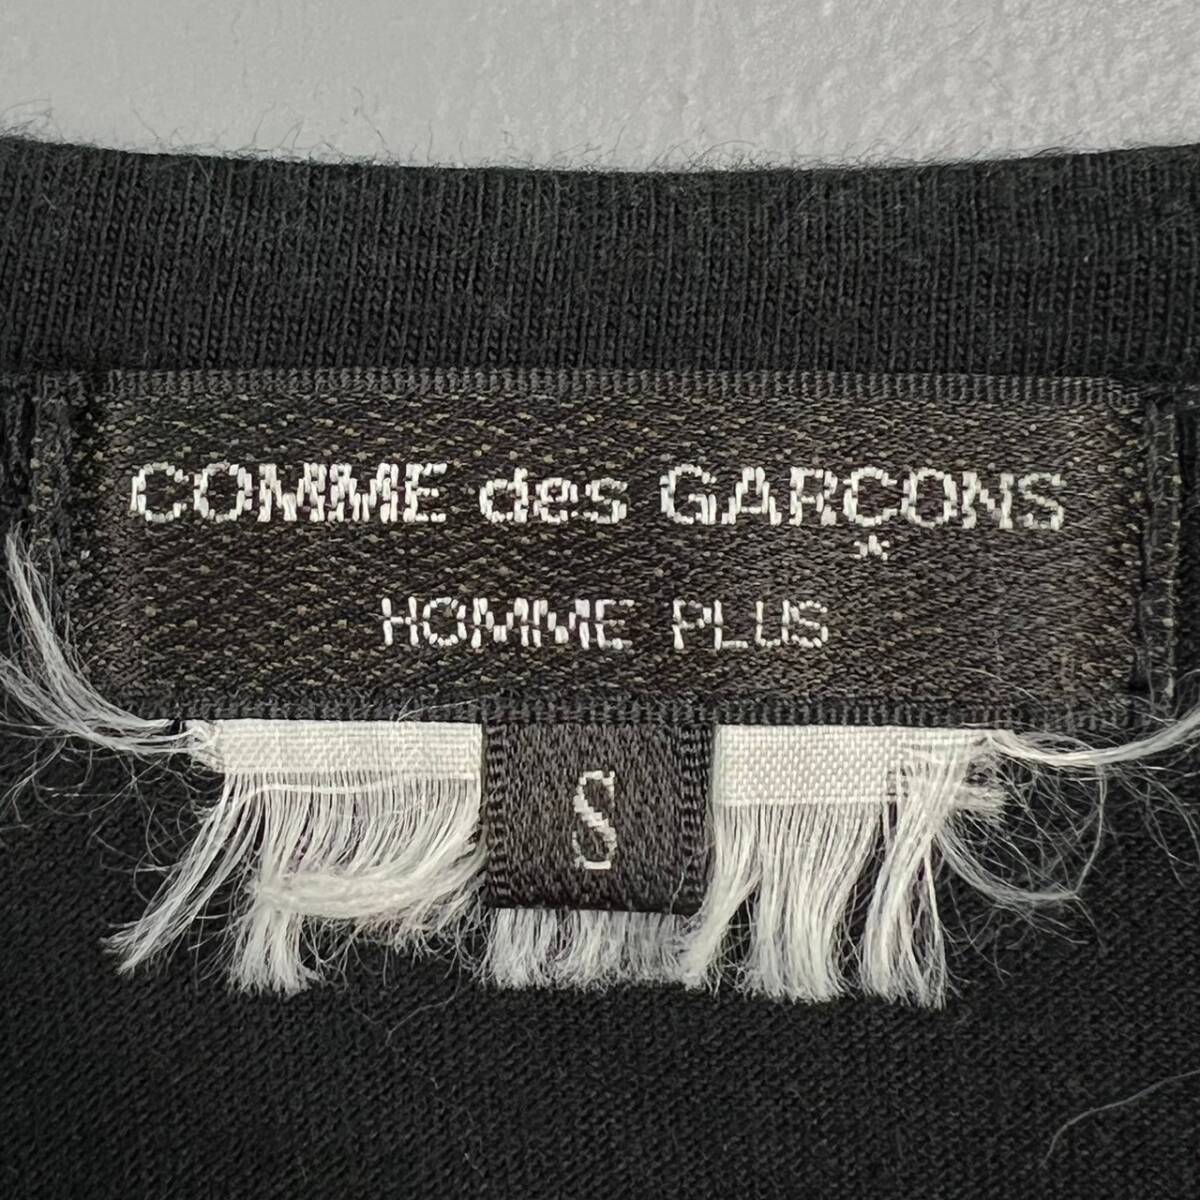 Wm137 日本製 COMME des GARCONS HOMME PLUS コムデギャルソン 半袖 Tシャツ メッセージT 袖裾シングル 黒 メンズ _画像6